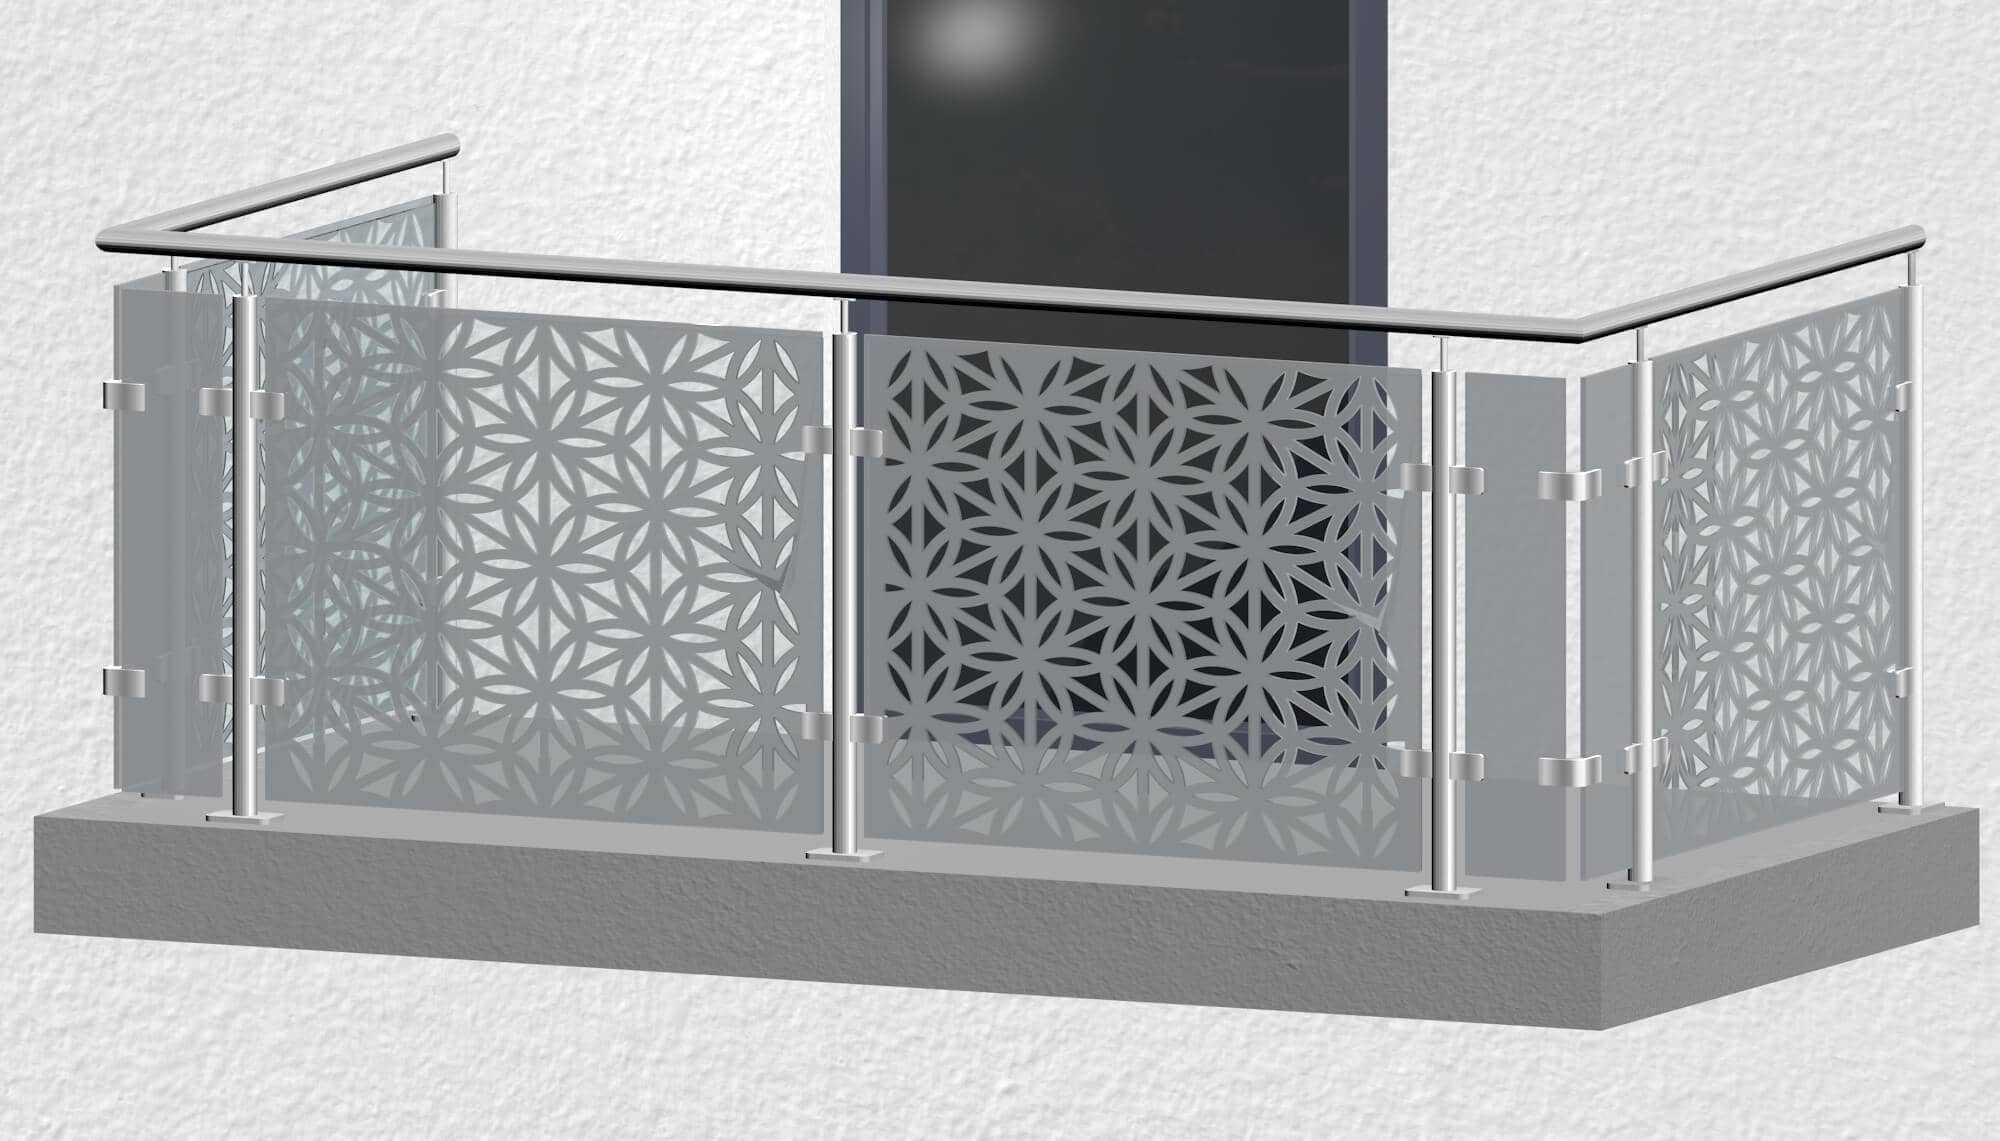 Balkonhek roestvrij staal ontwerp glas BT MO